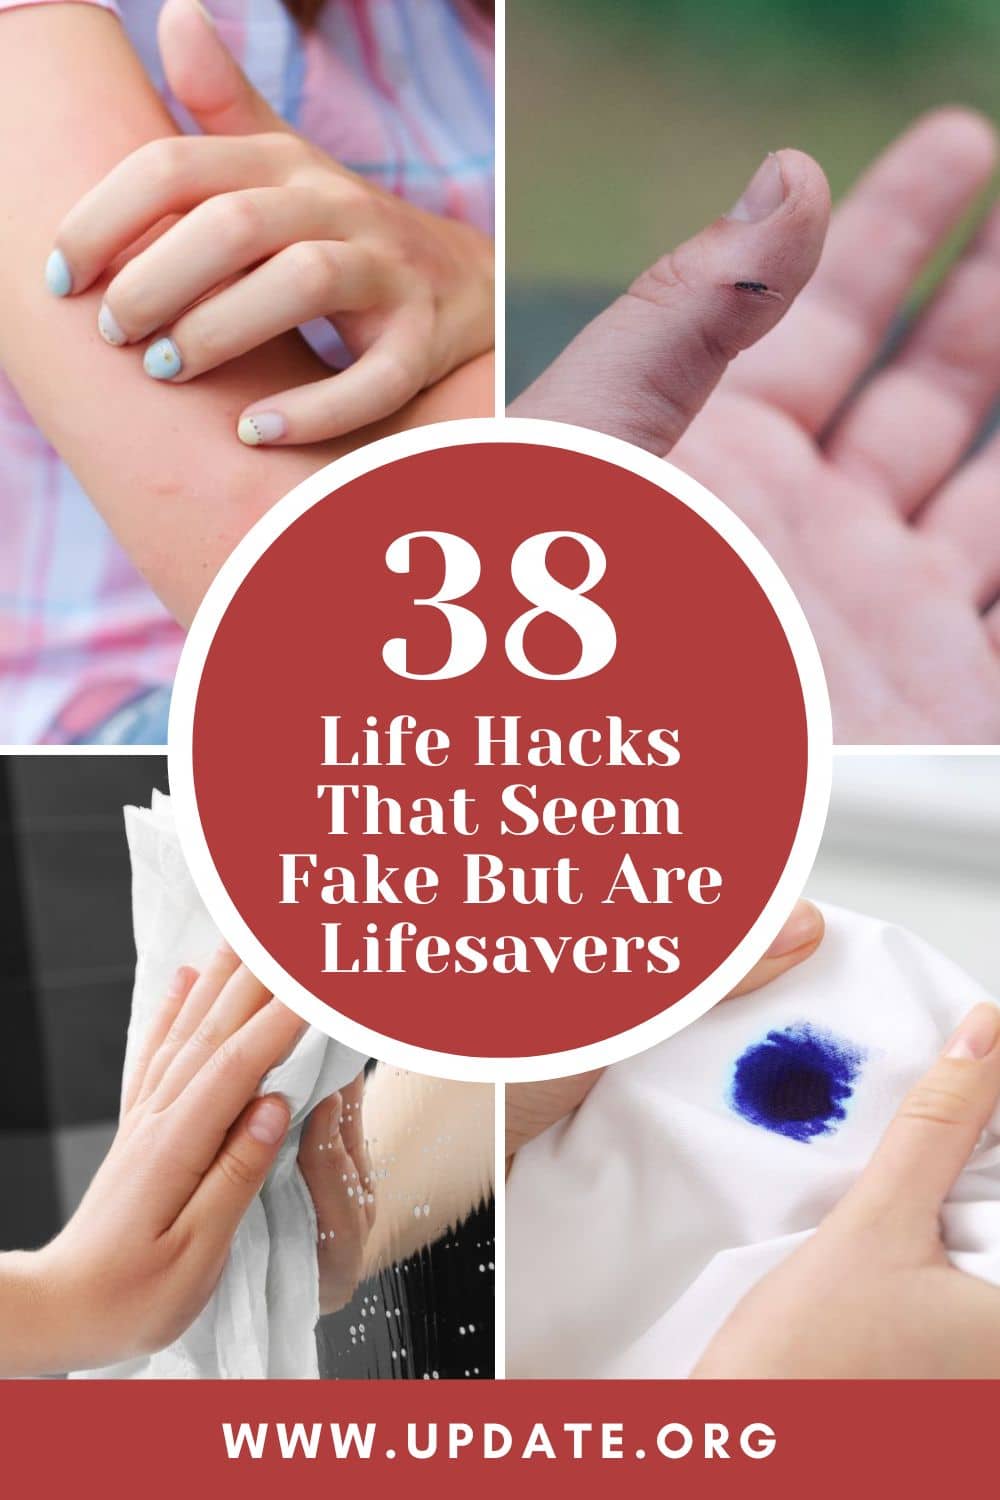 38 Life Hacks That Seem Fake But Are Lifesavers pinterest image.